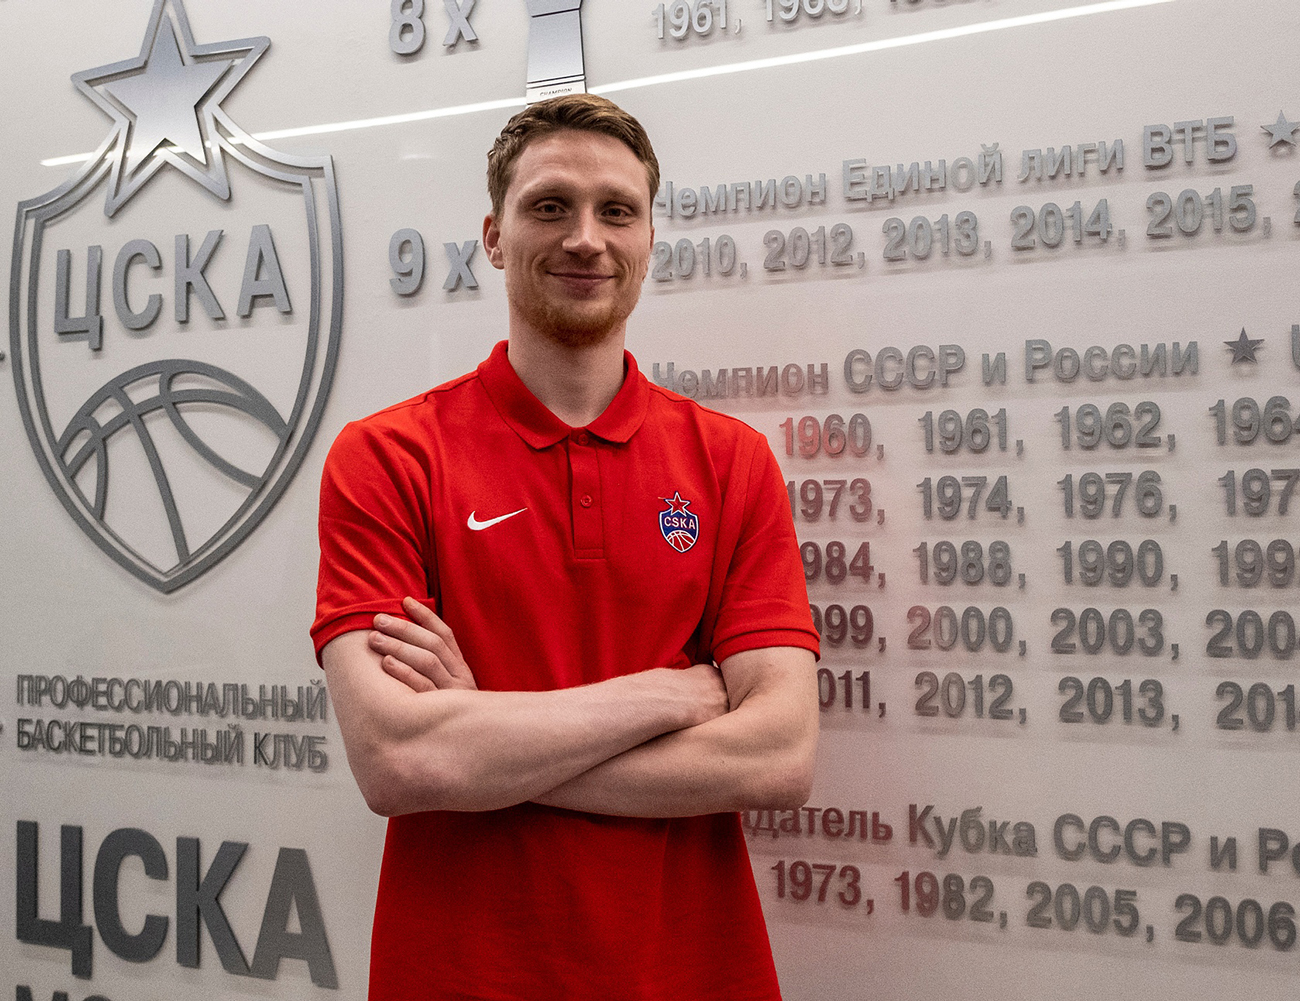 Marius Grigonis joins CSKA